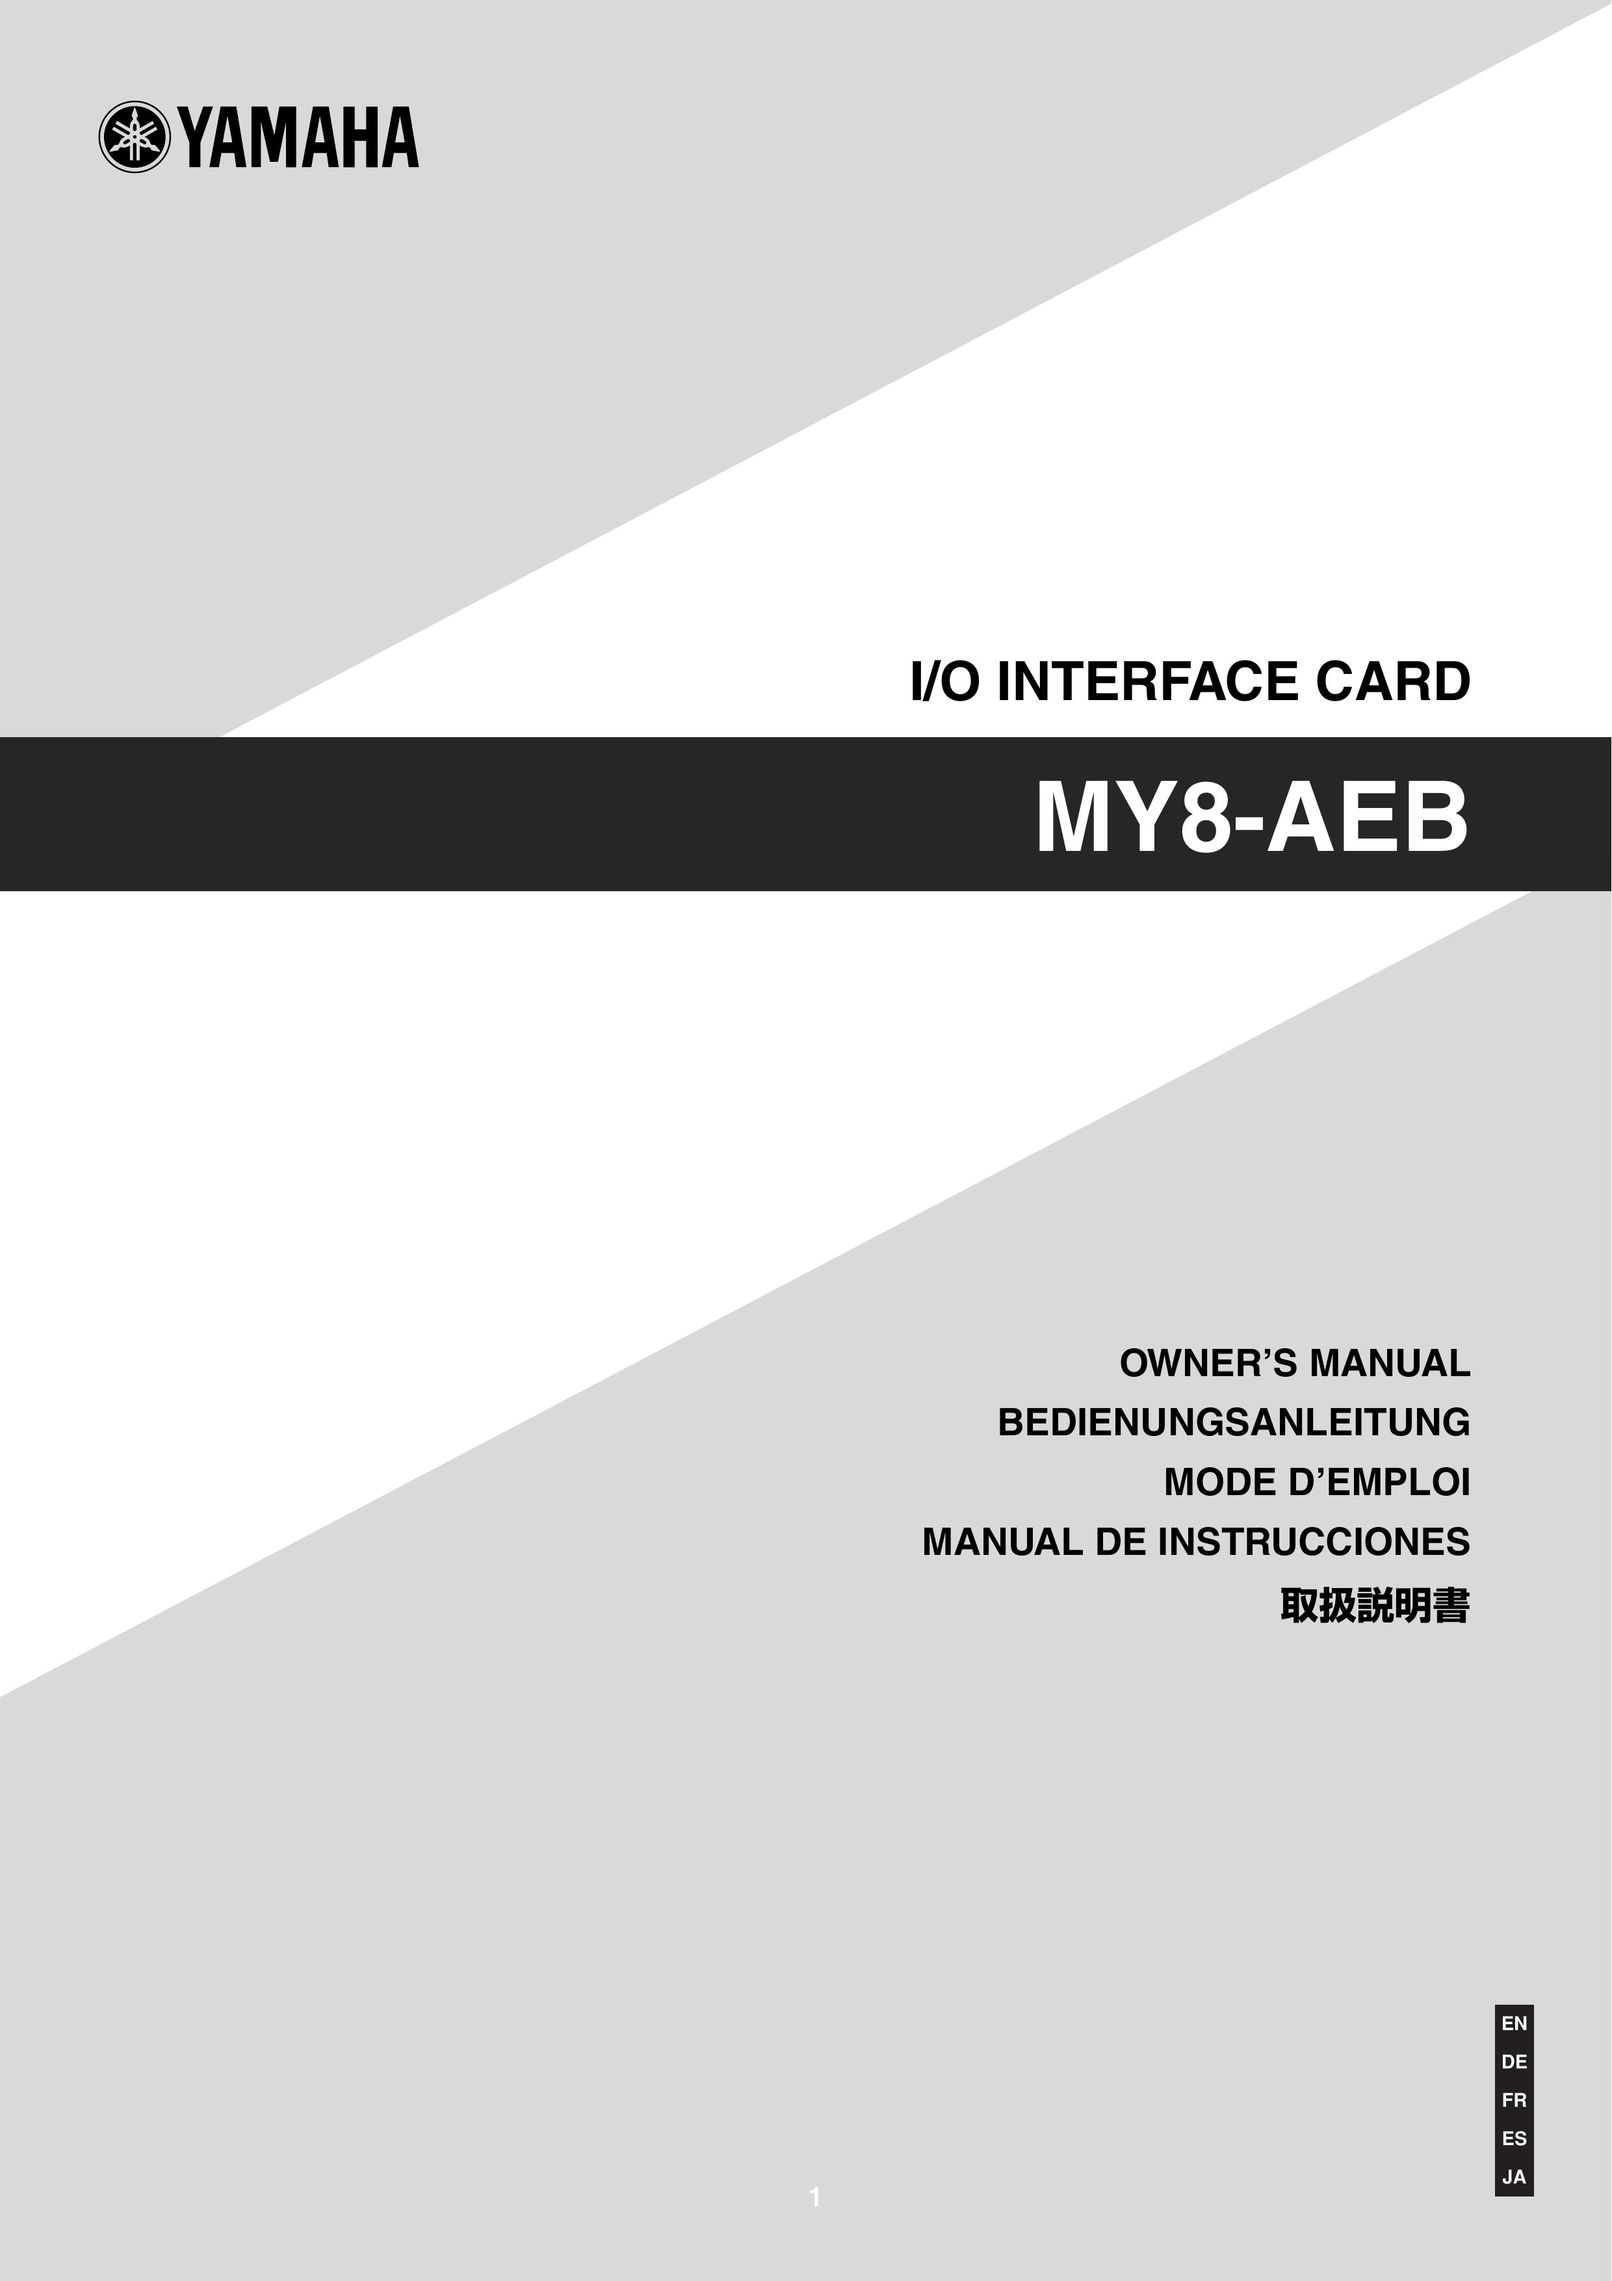 Yamaha MY8-AEB Network Card User Manual